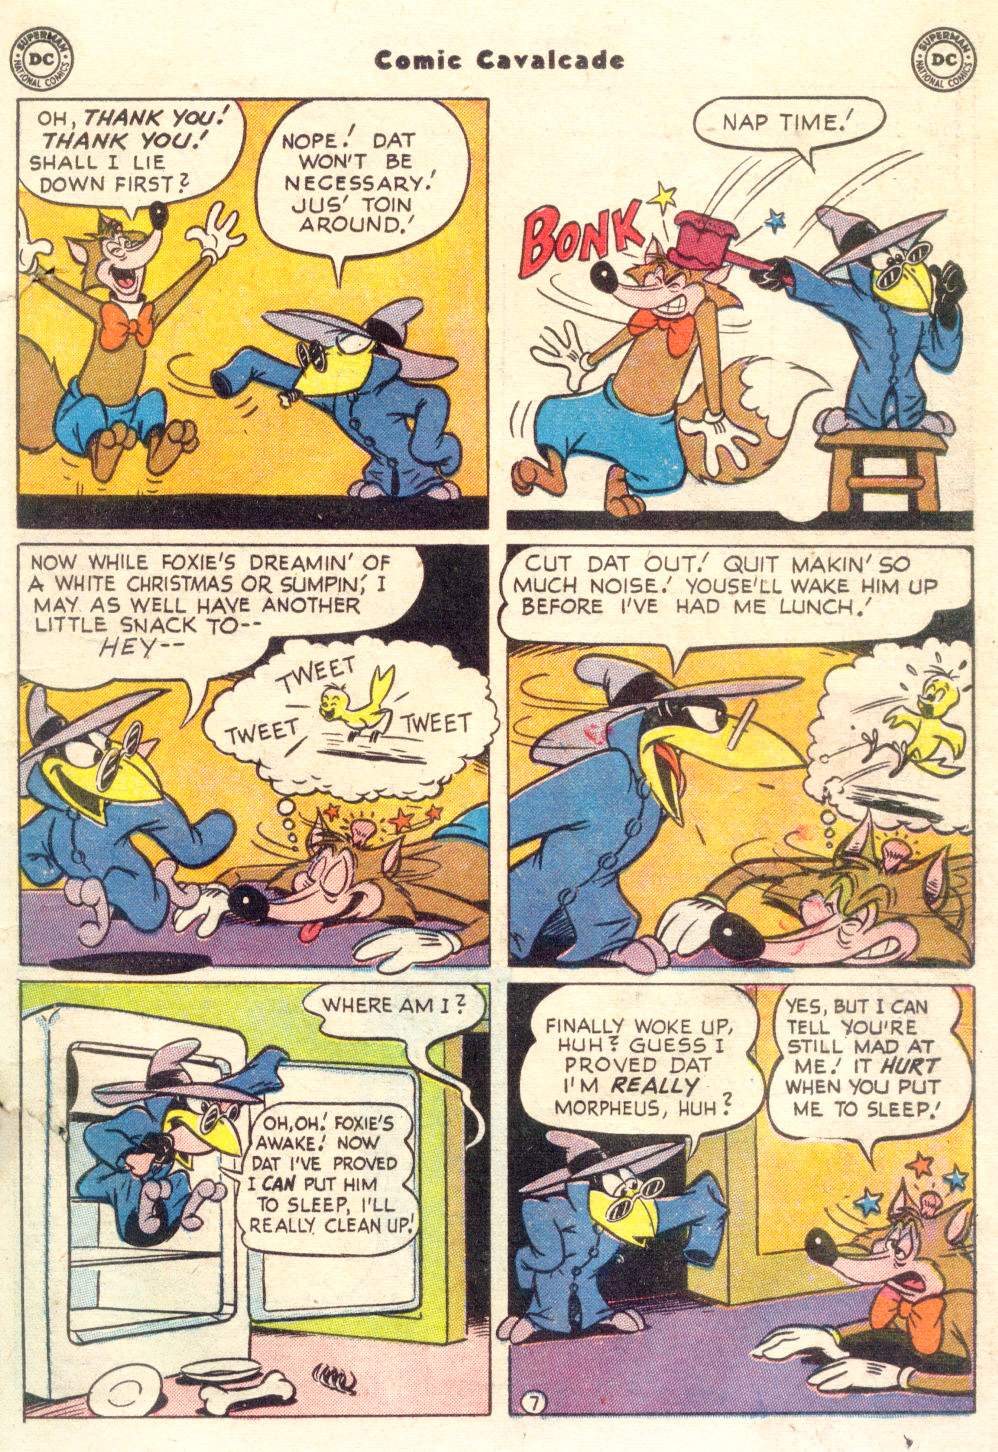 Comic Cavalcade issue 45 - Page 9